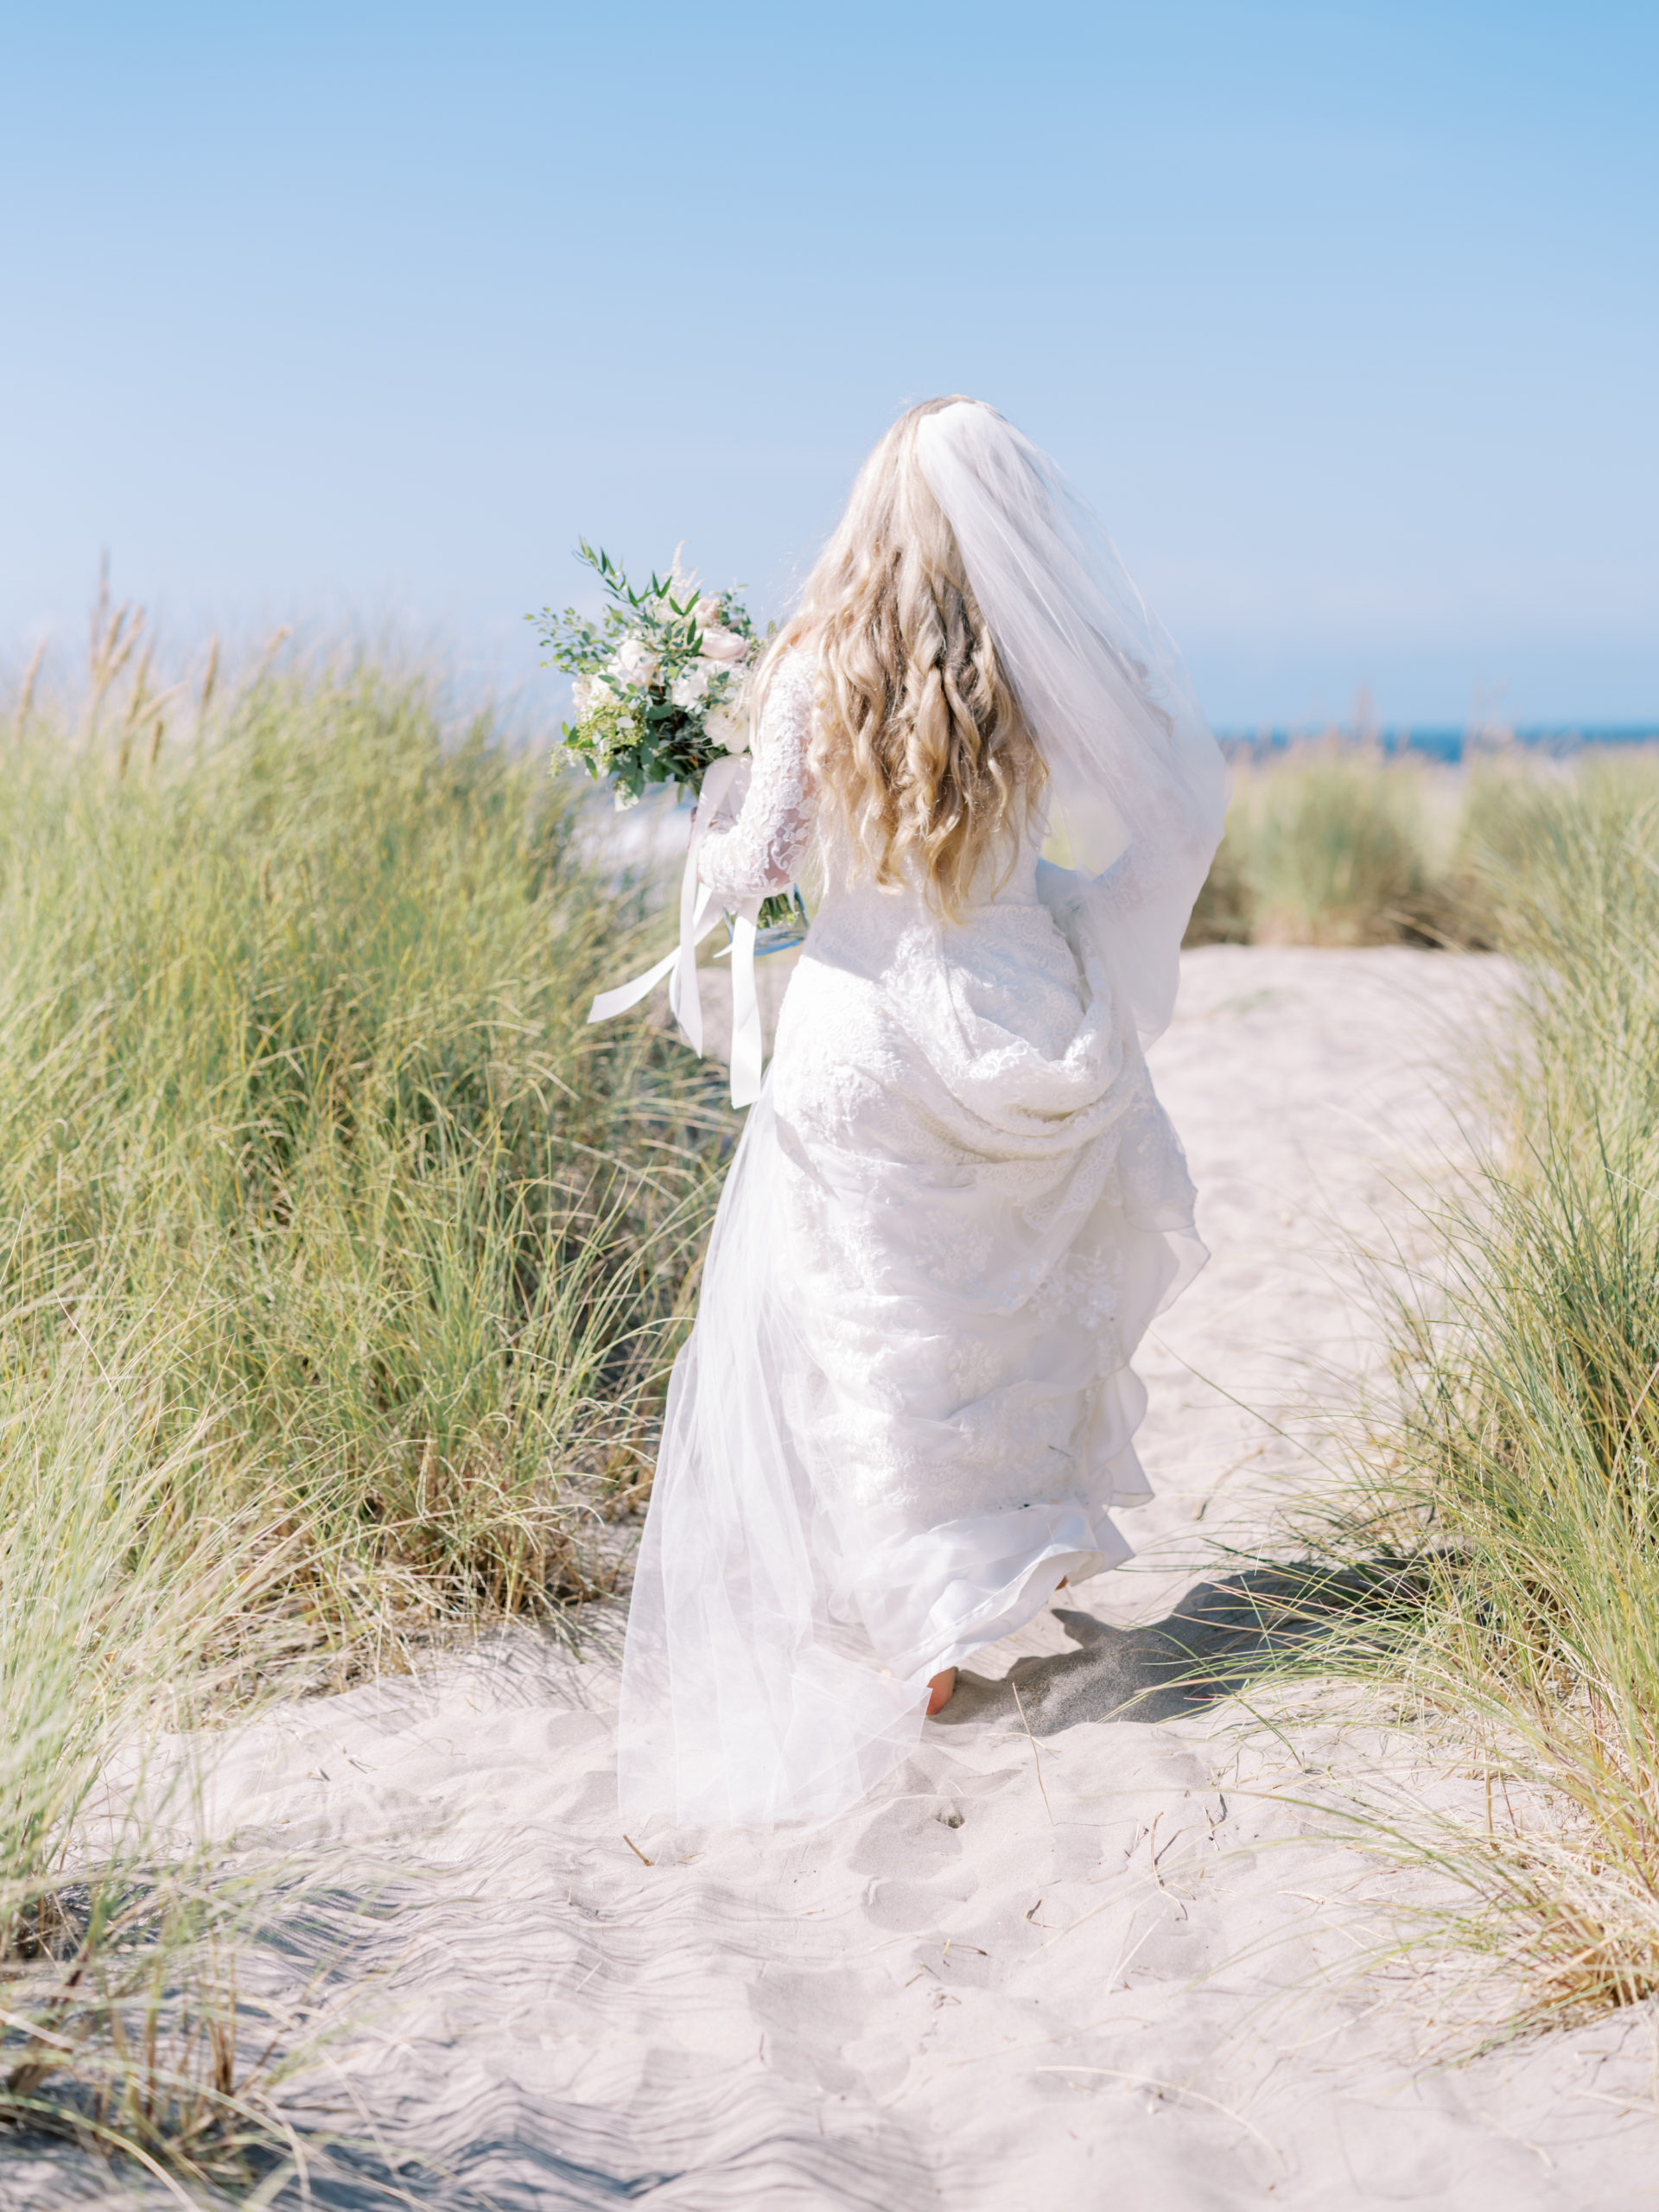 Cannon Beach Wedding - walking through seagrass